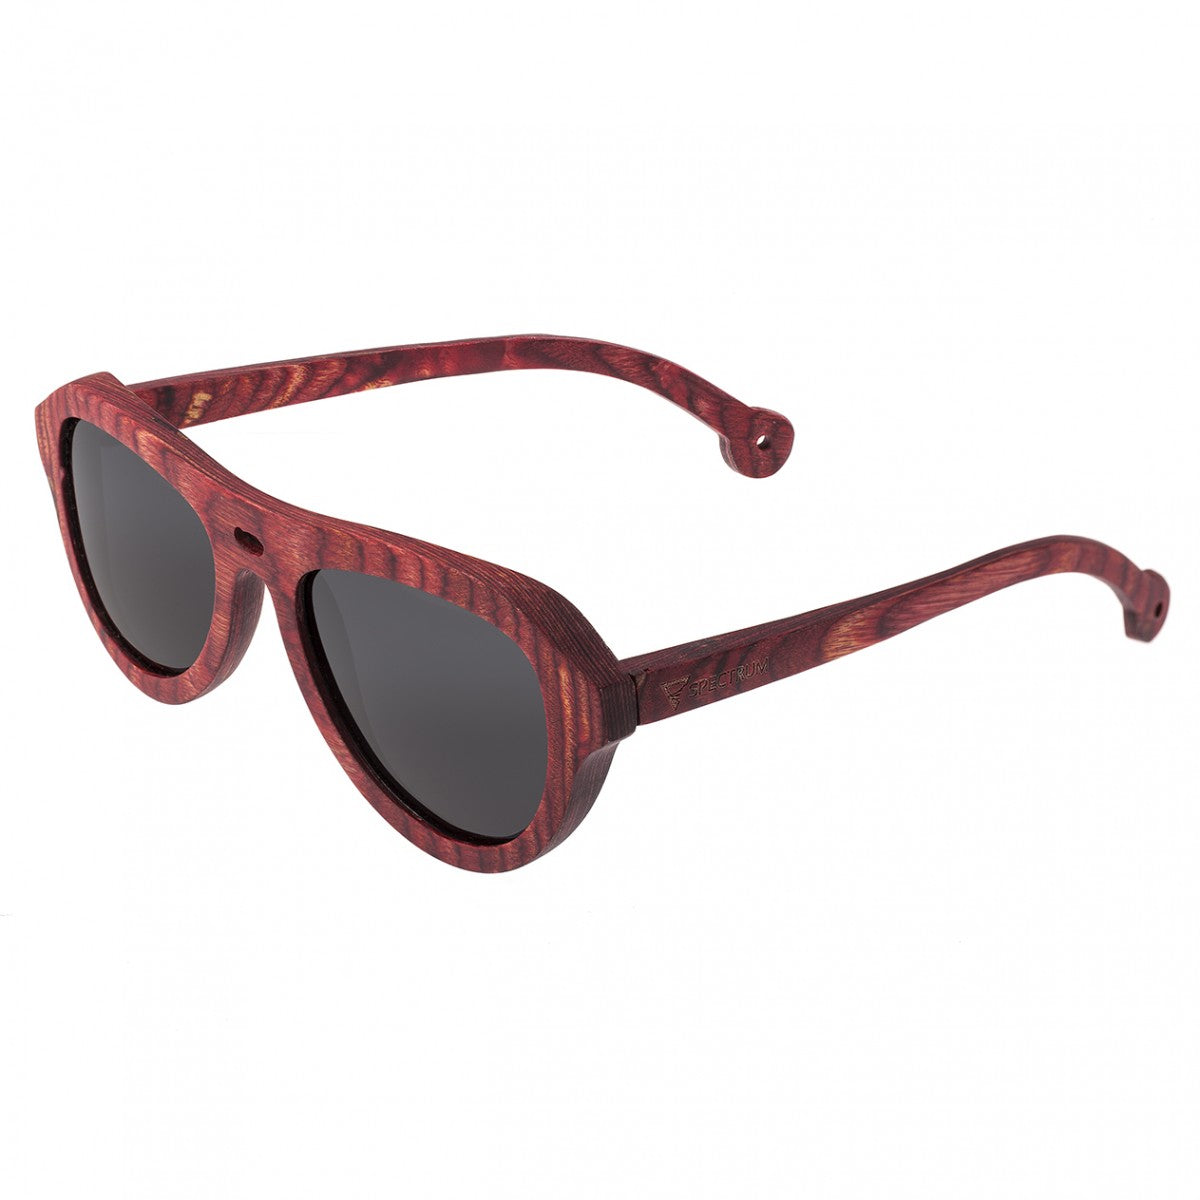 Spectrum Keaulana Wood Polarized Sunglasses - Cherry/Black - SSGS112BK